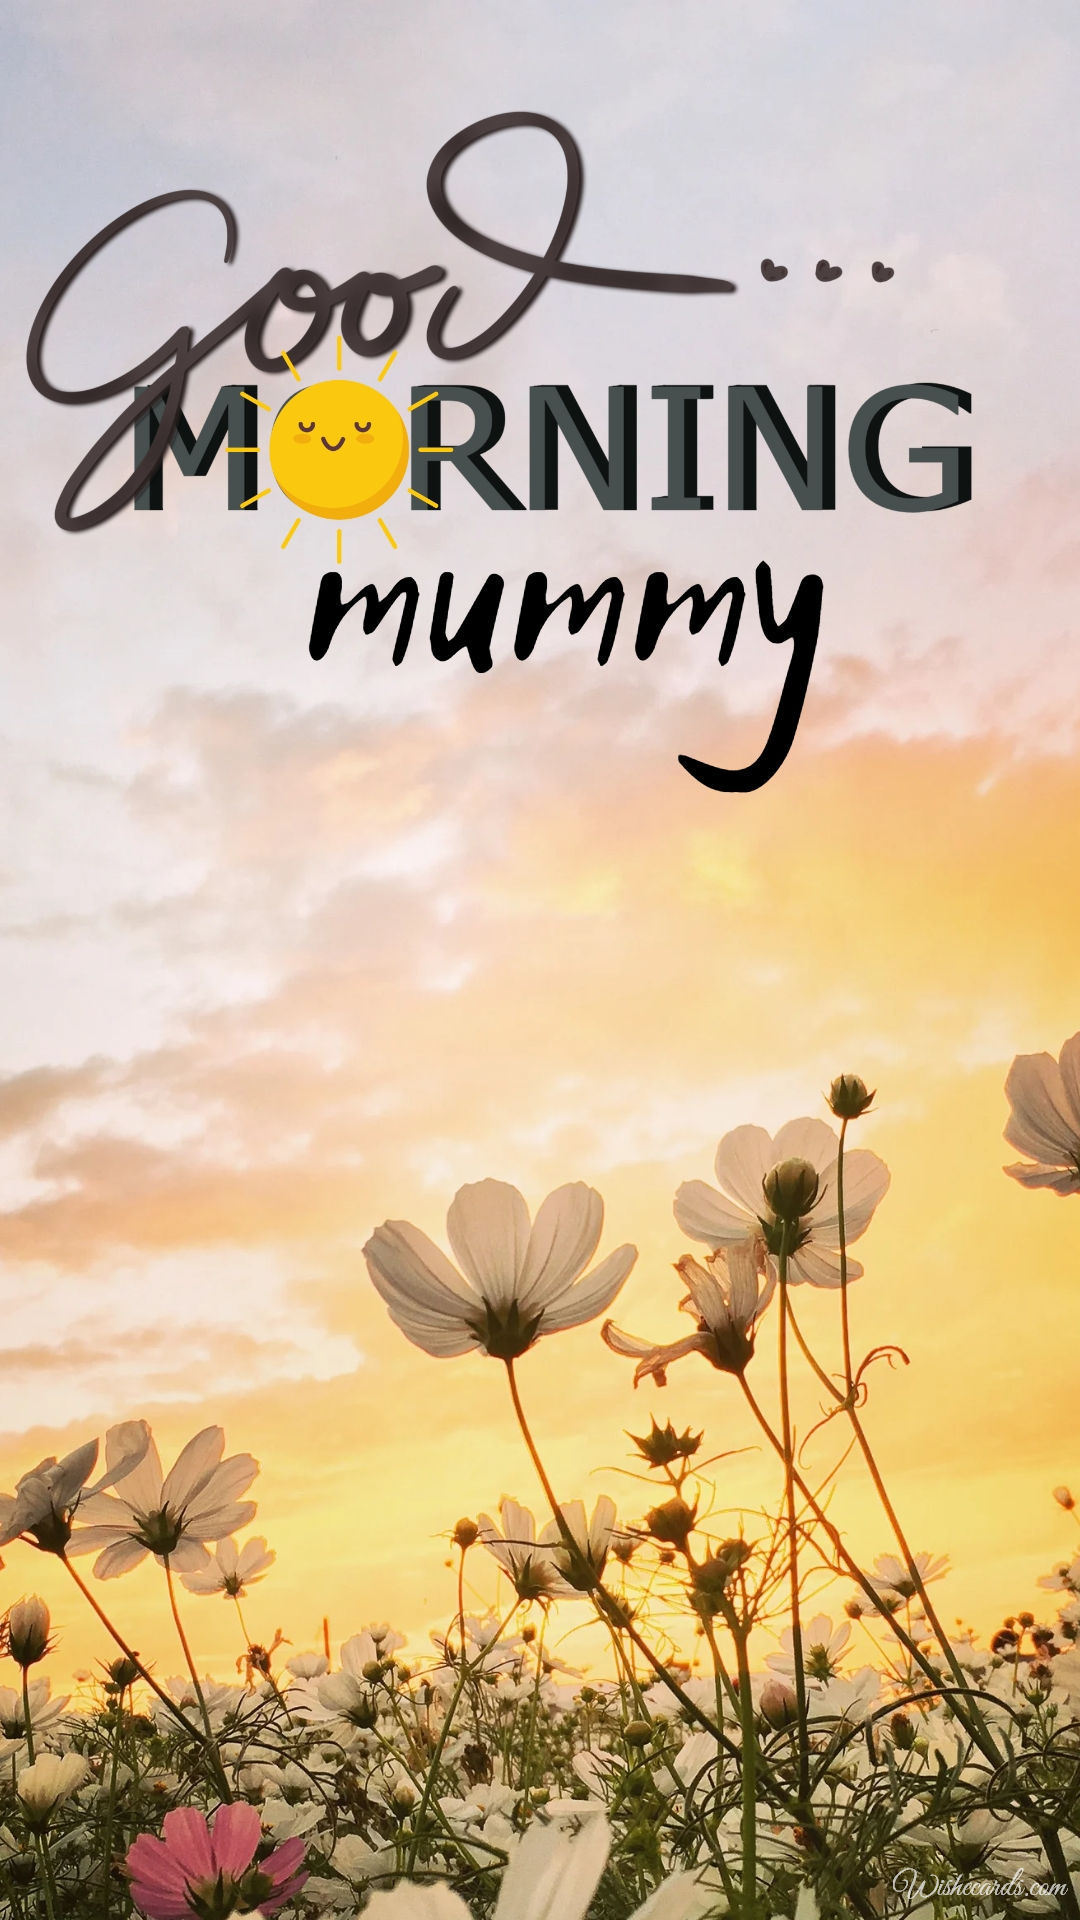 Mom Good Morning Image